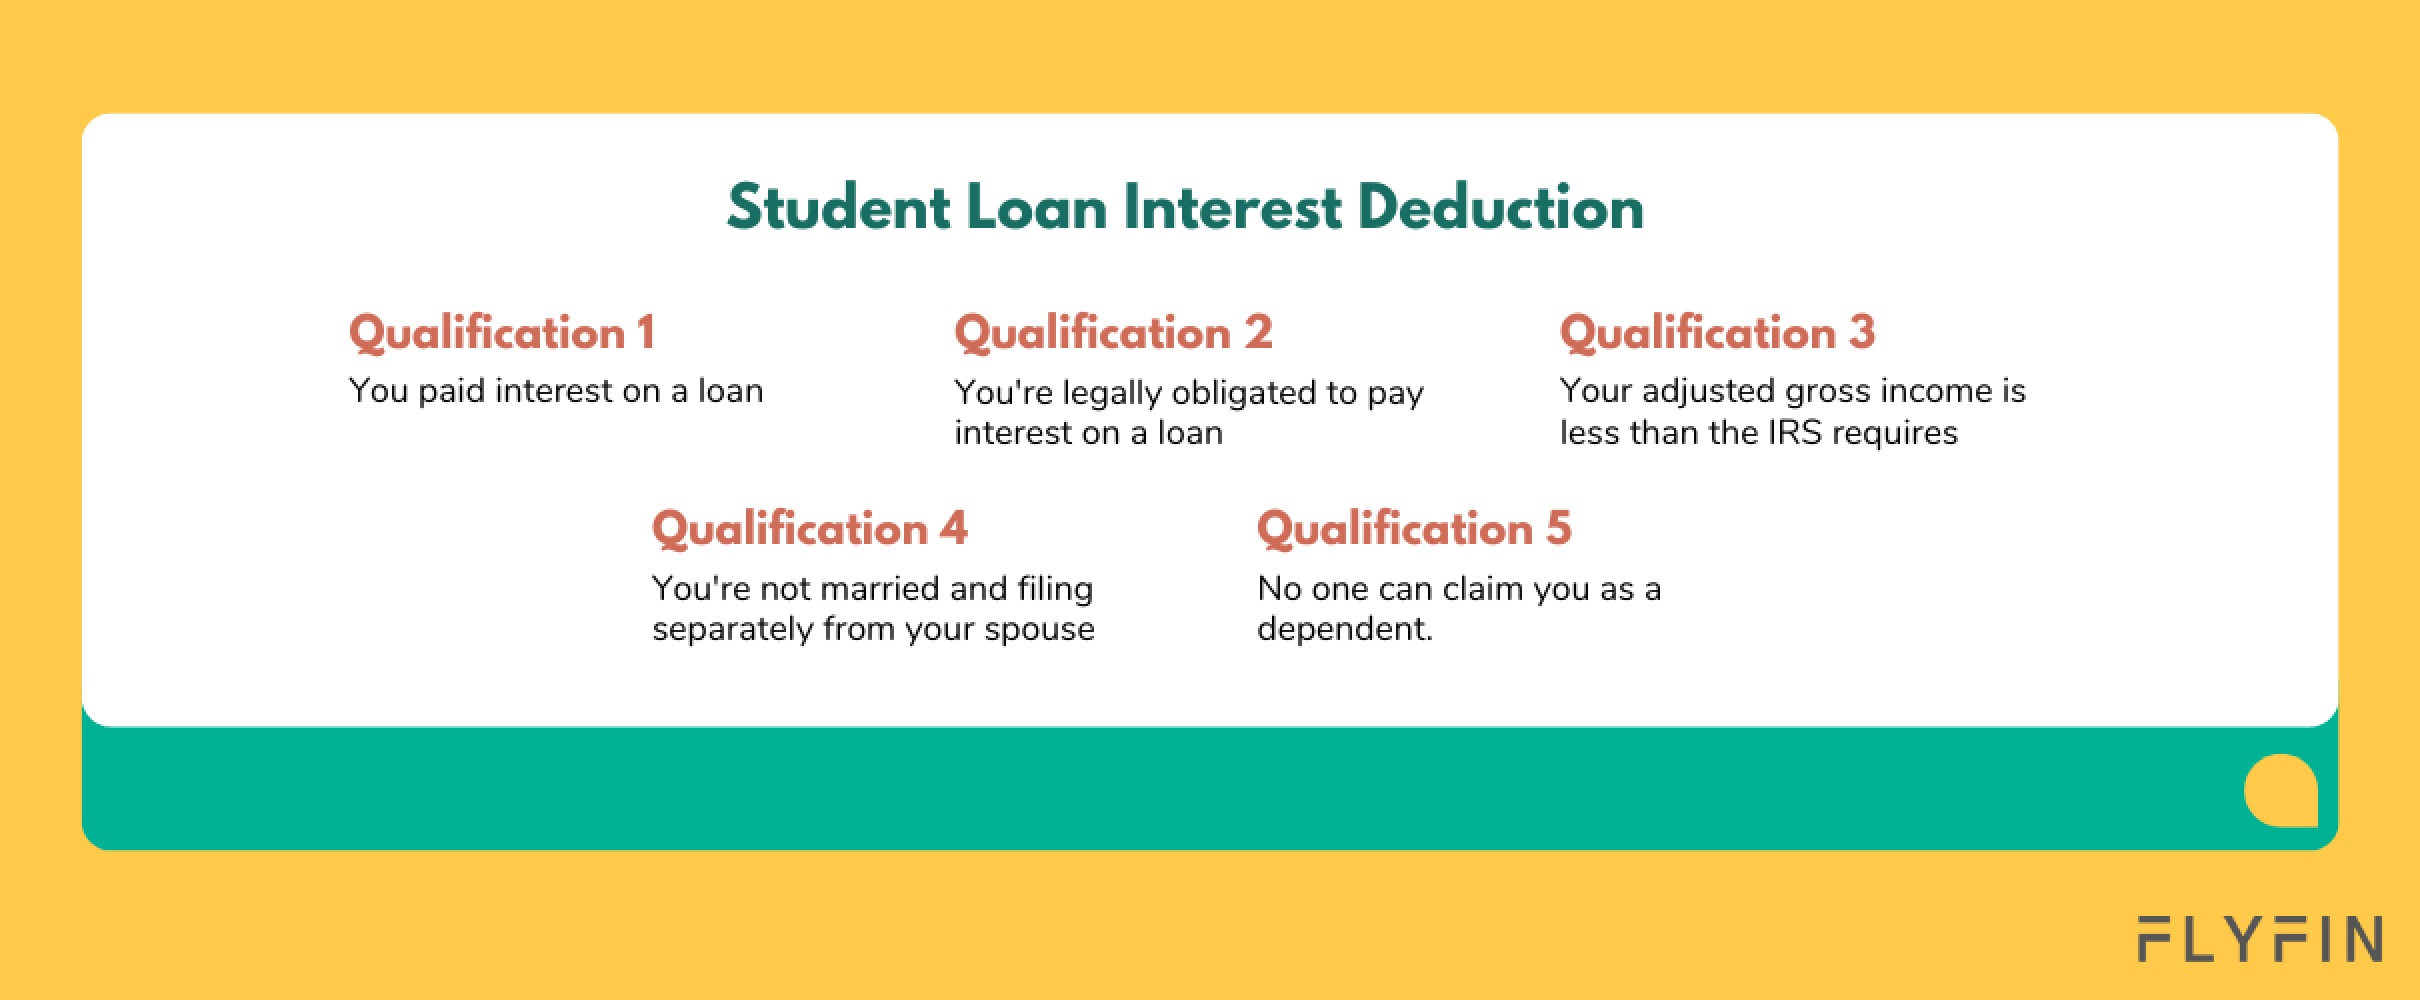 Student loan interest deductions